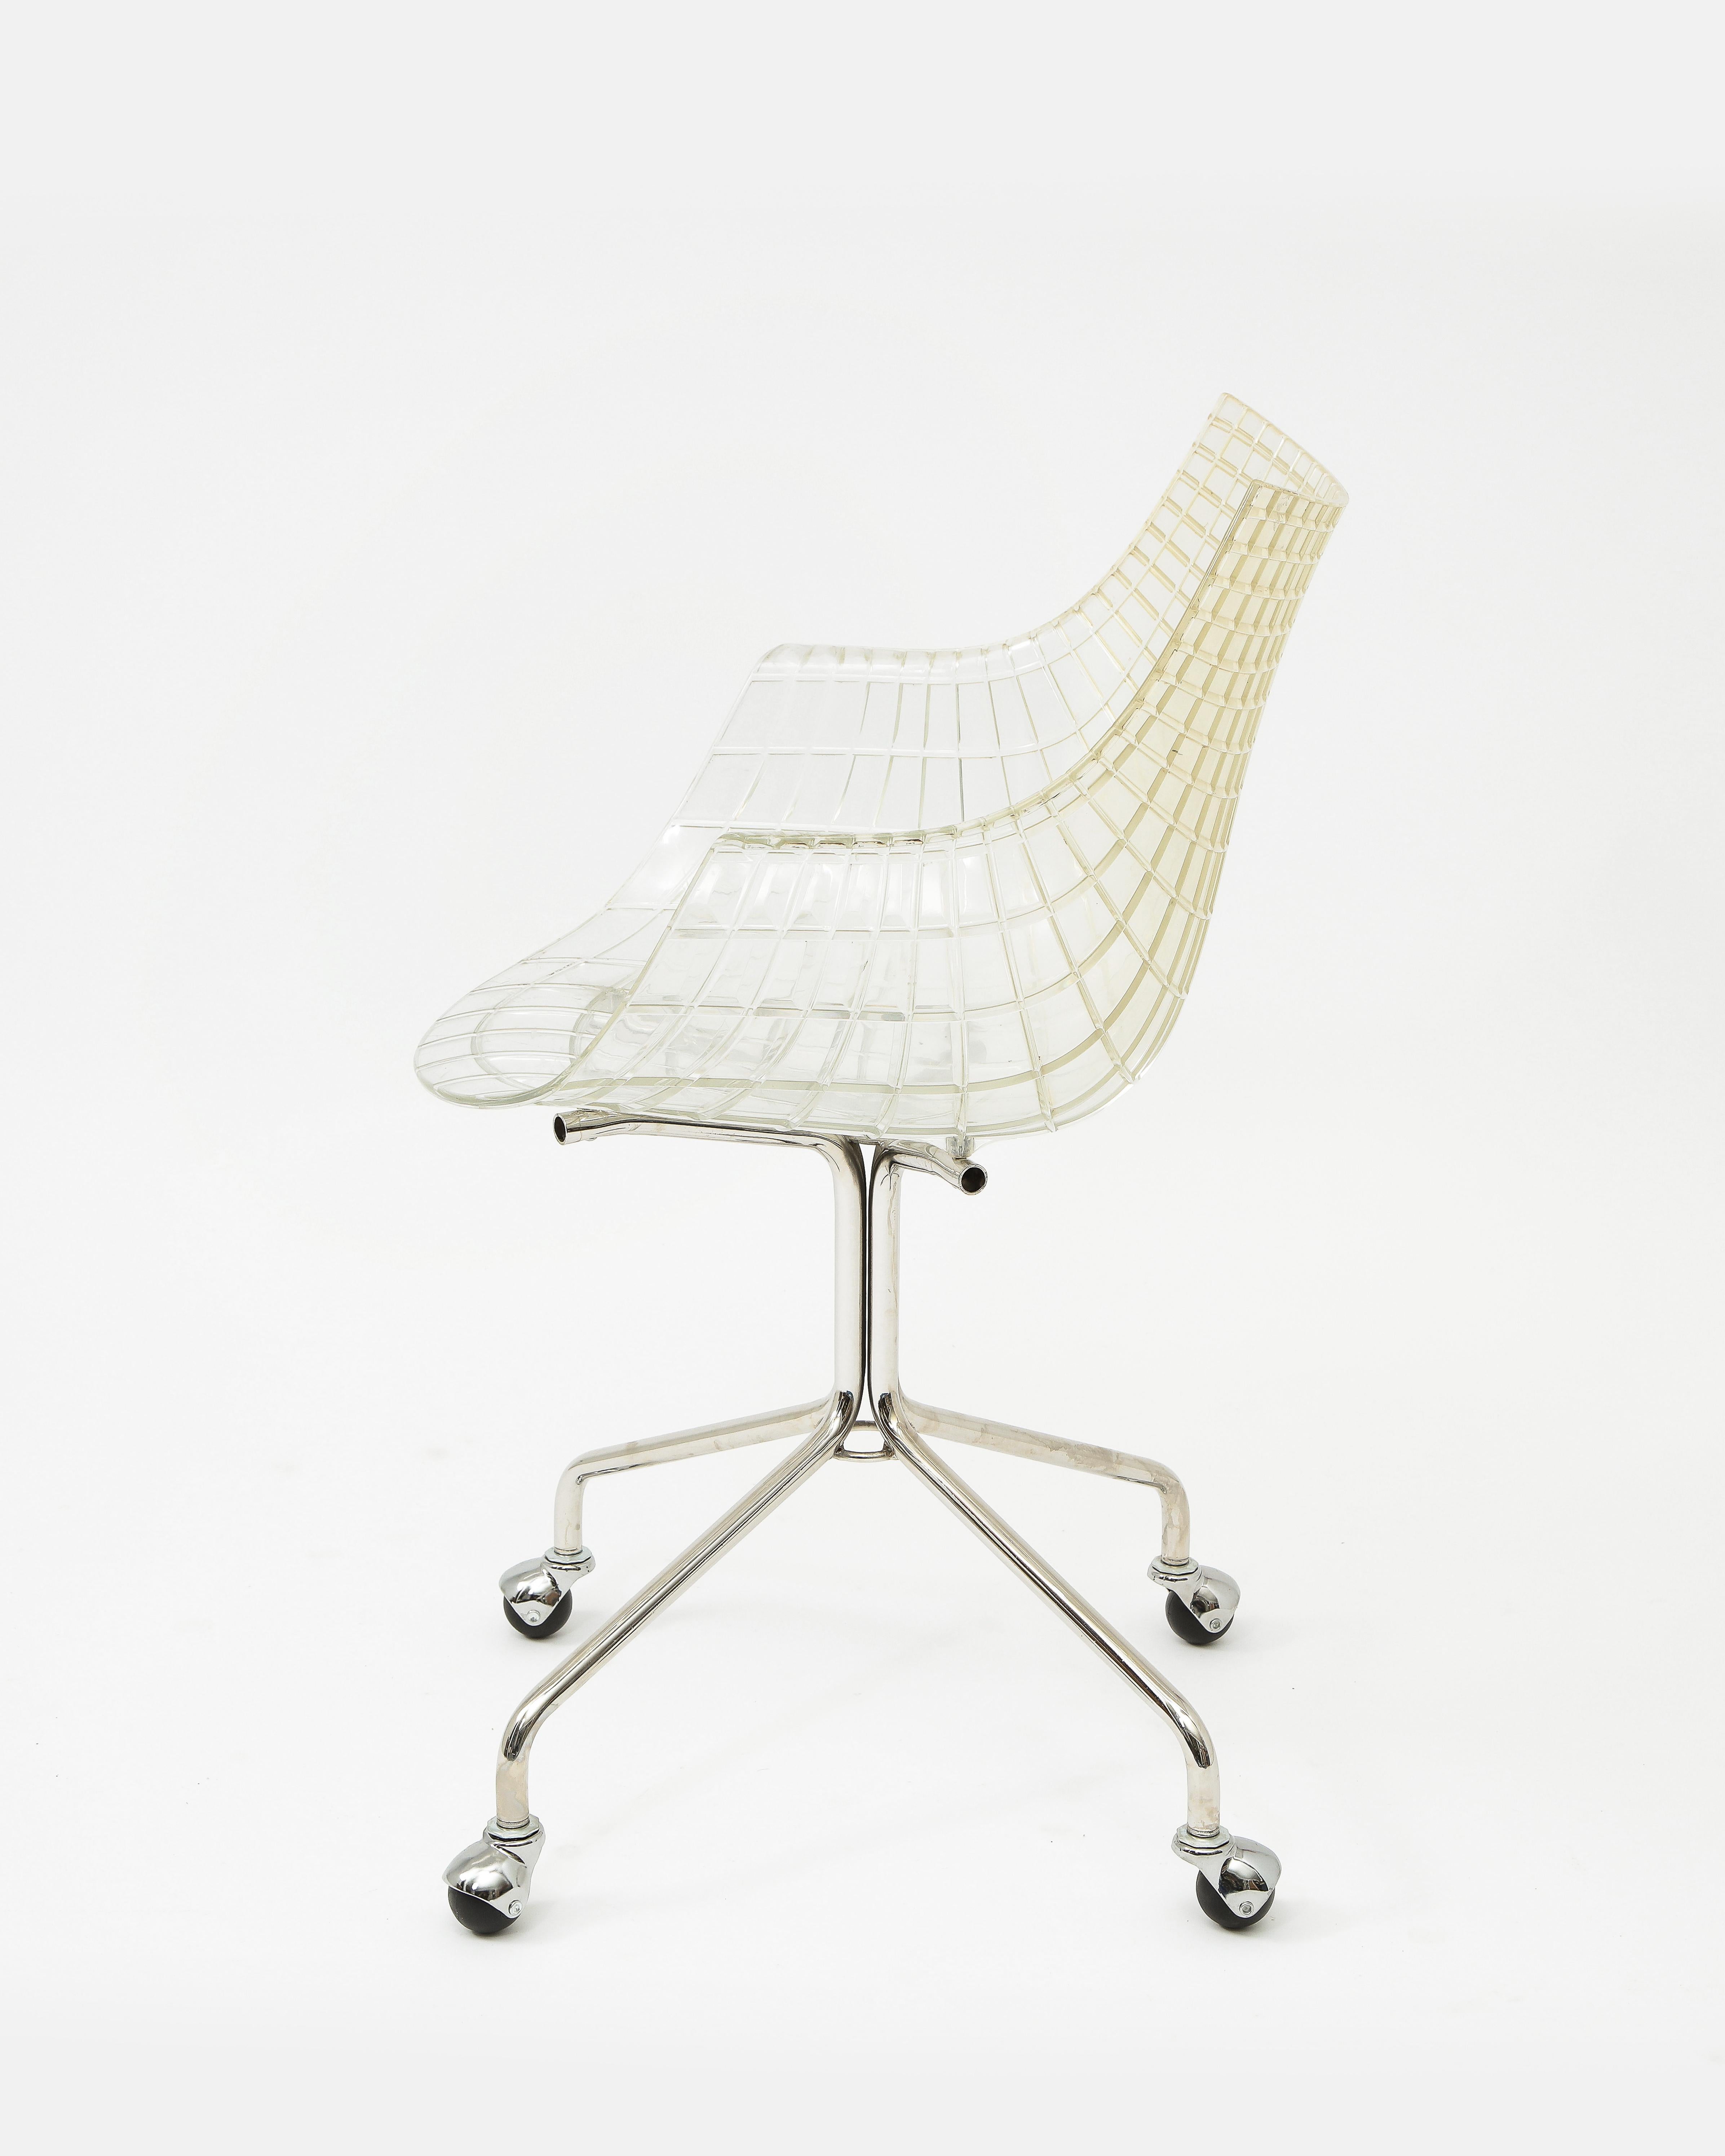 Contemporary Chrome and Acrylic Italian Driade Desk Chairs 1